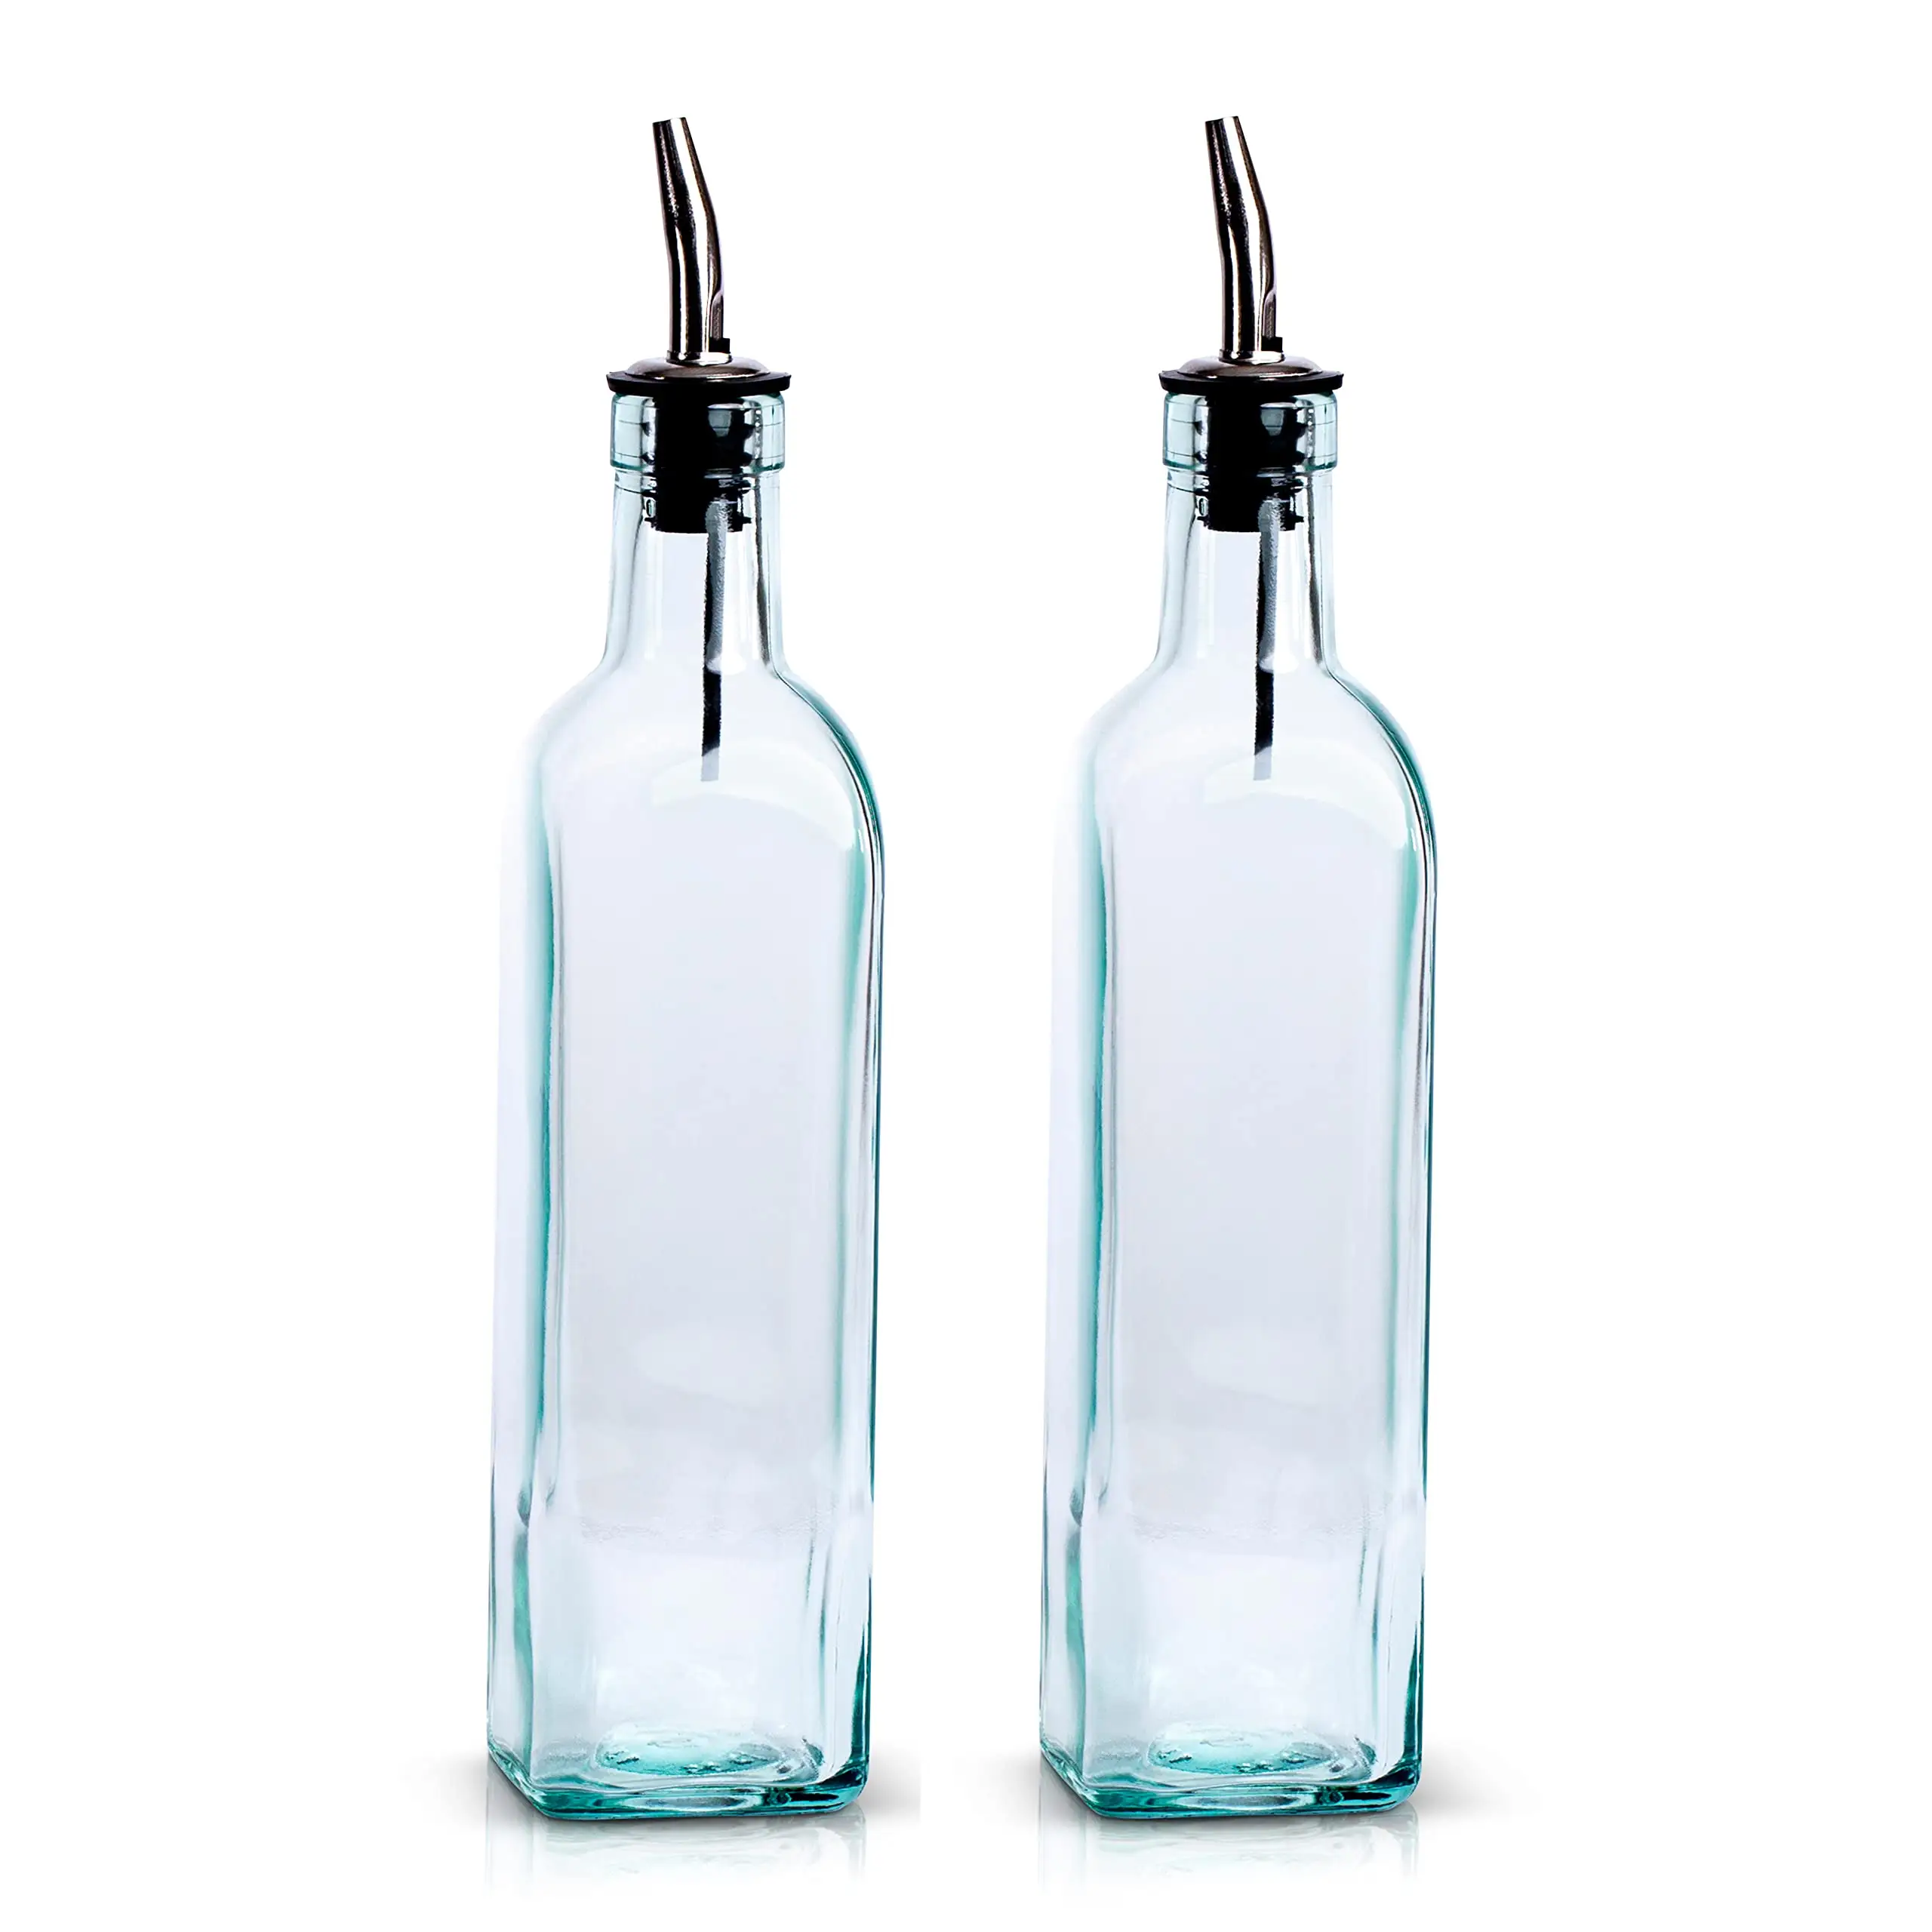 Dispensador de óleo garrafa de vidro condimento molho de soja garrafas de vidro óleo e vinagre galheteiro